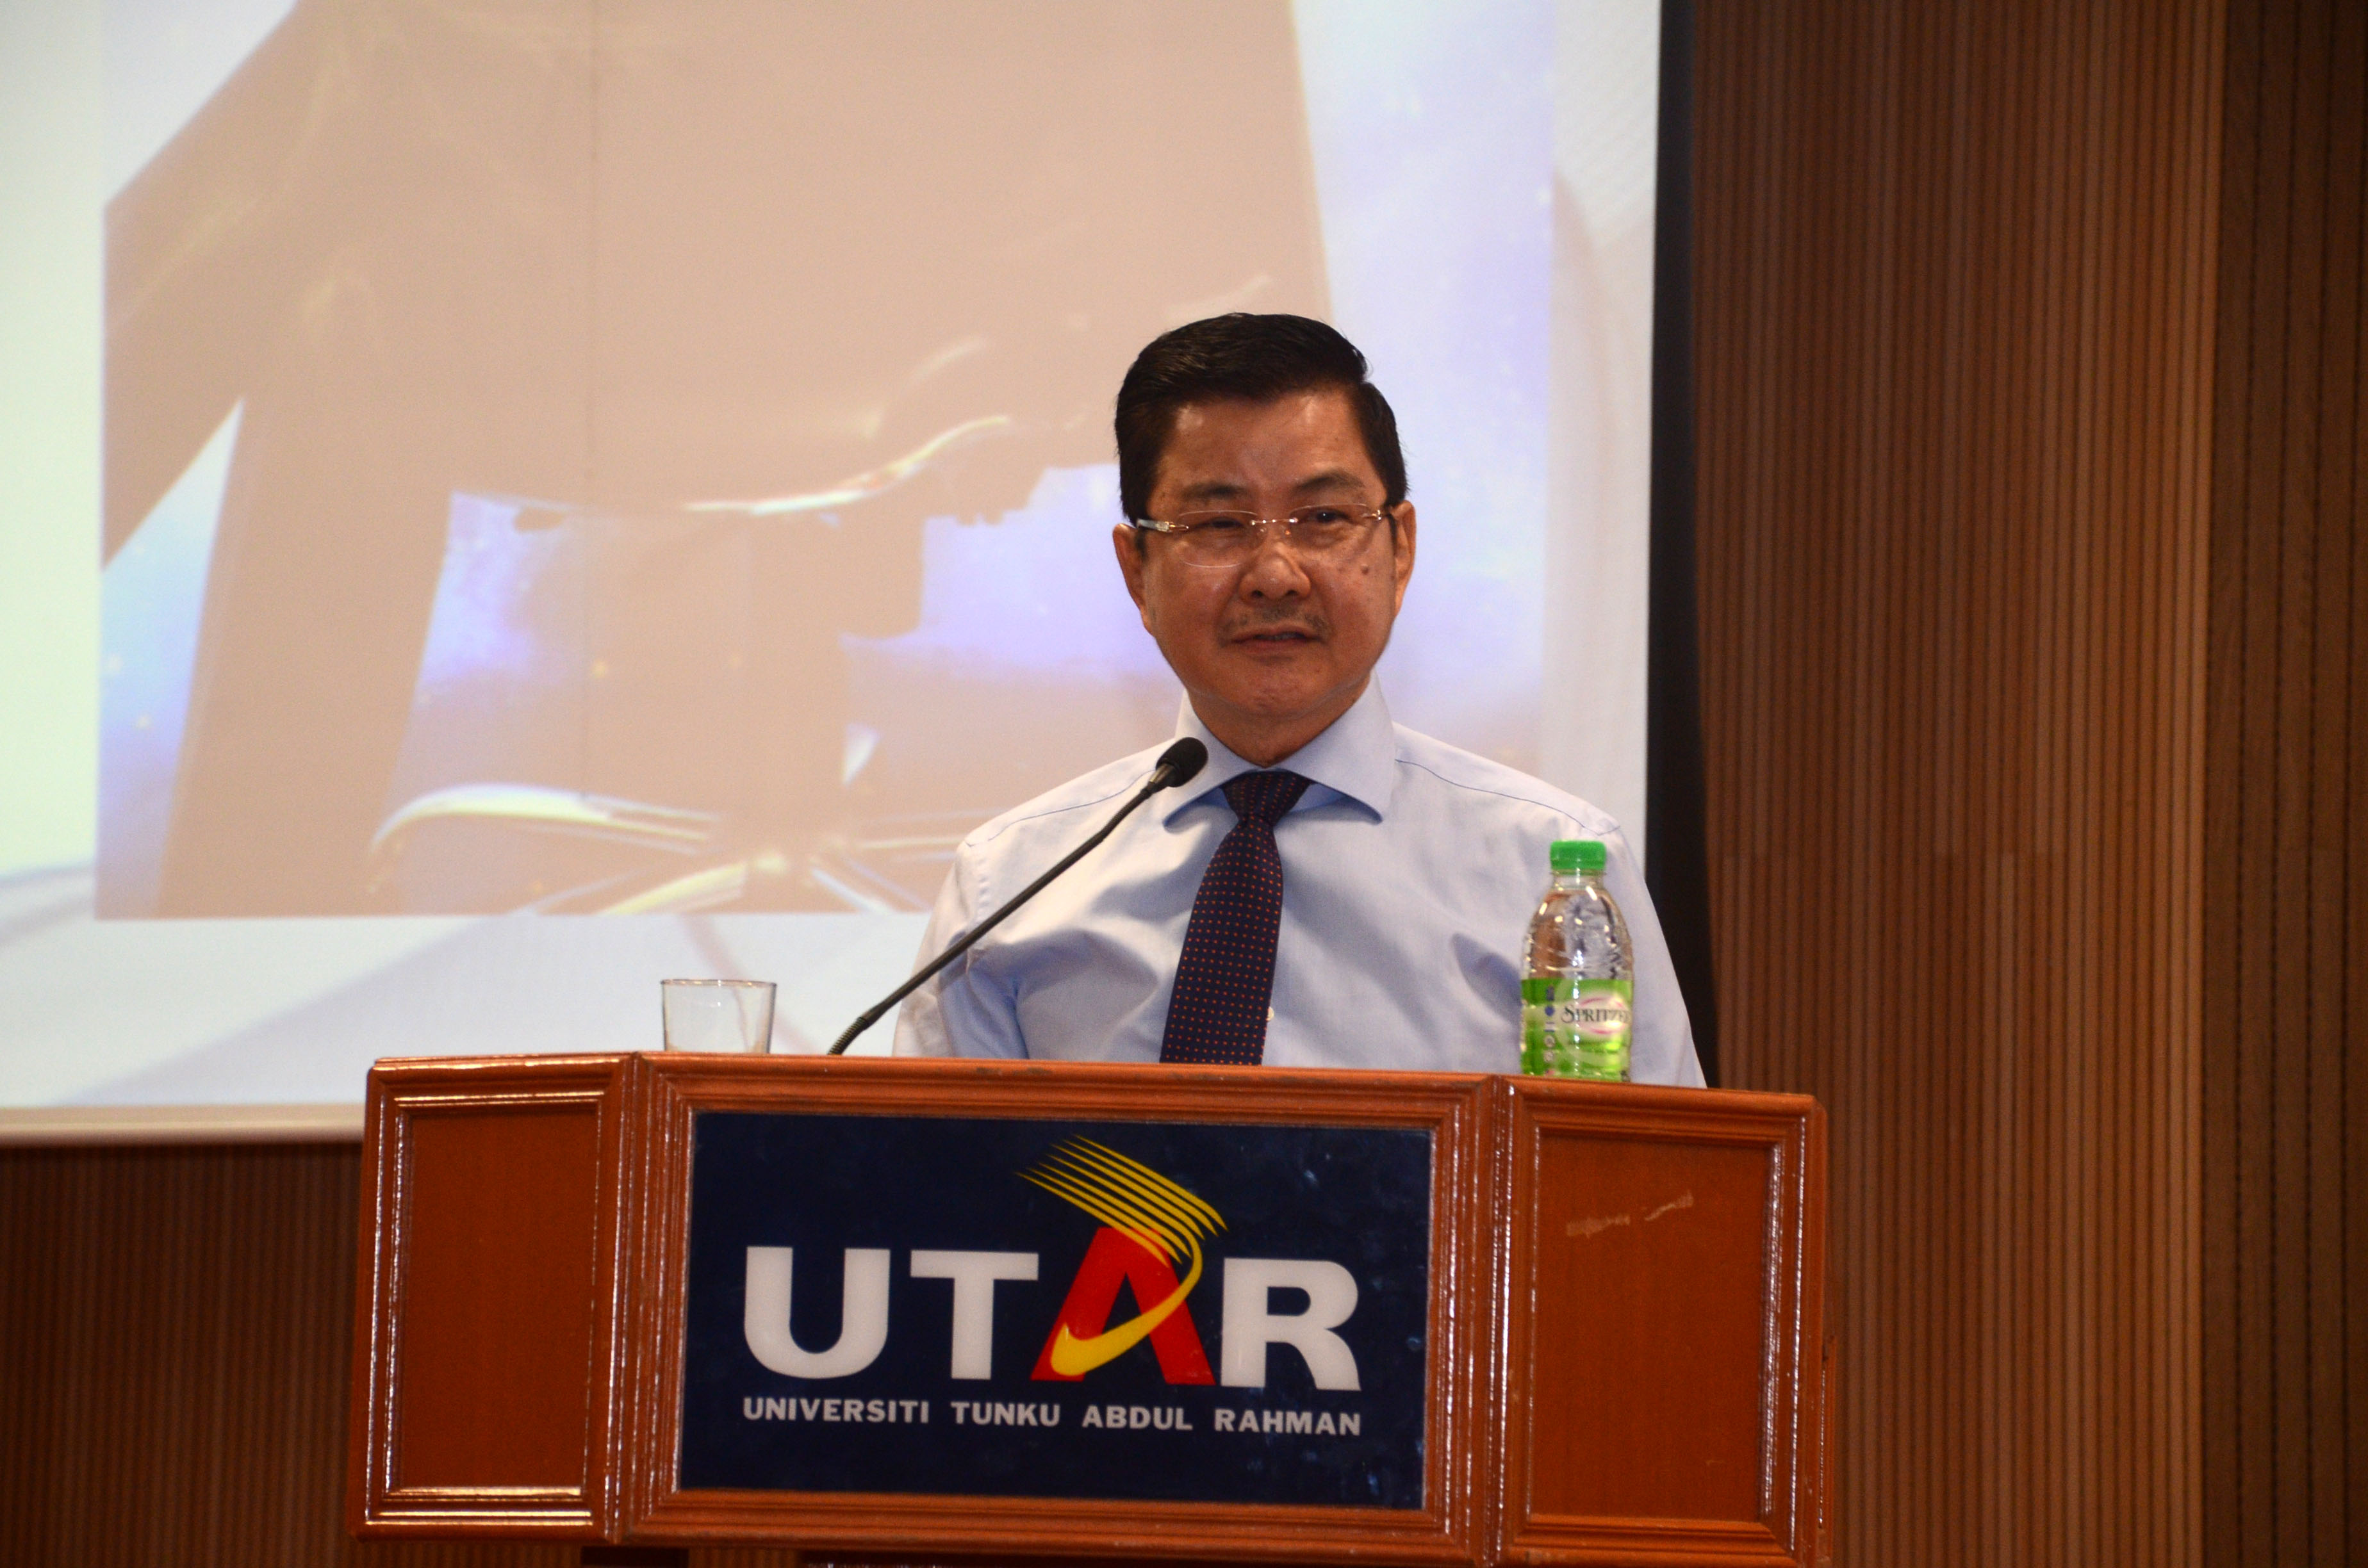 Tan Sri Kong speaking about his entrepreneurial ventures